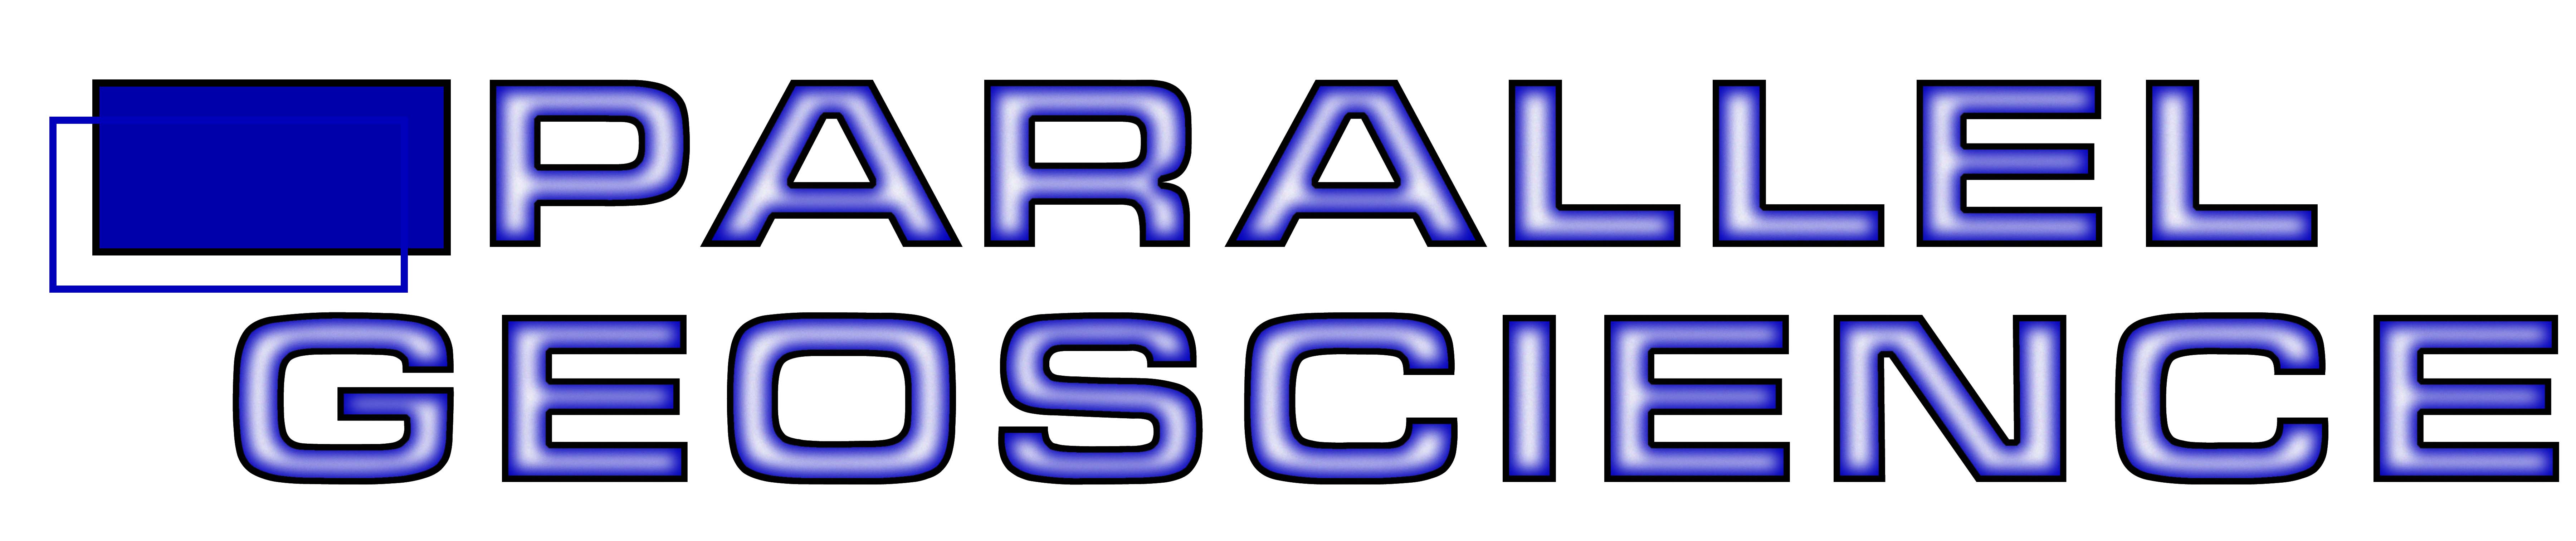 Parallel Geoscience logo